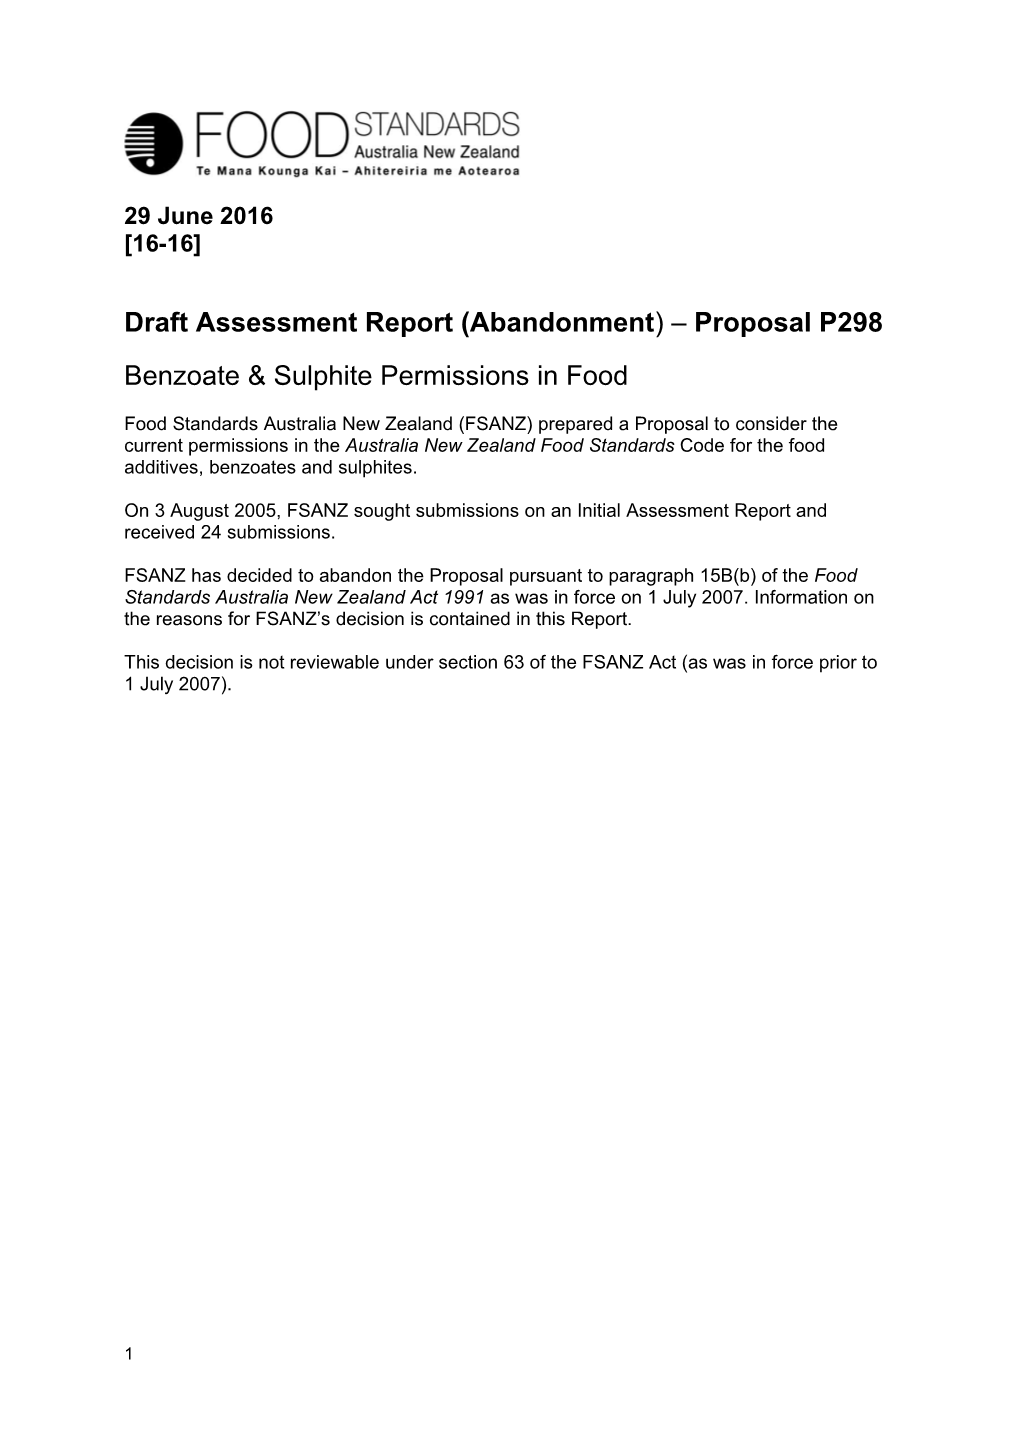 Draft Assessment Report (Abandonment) Proposal P298